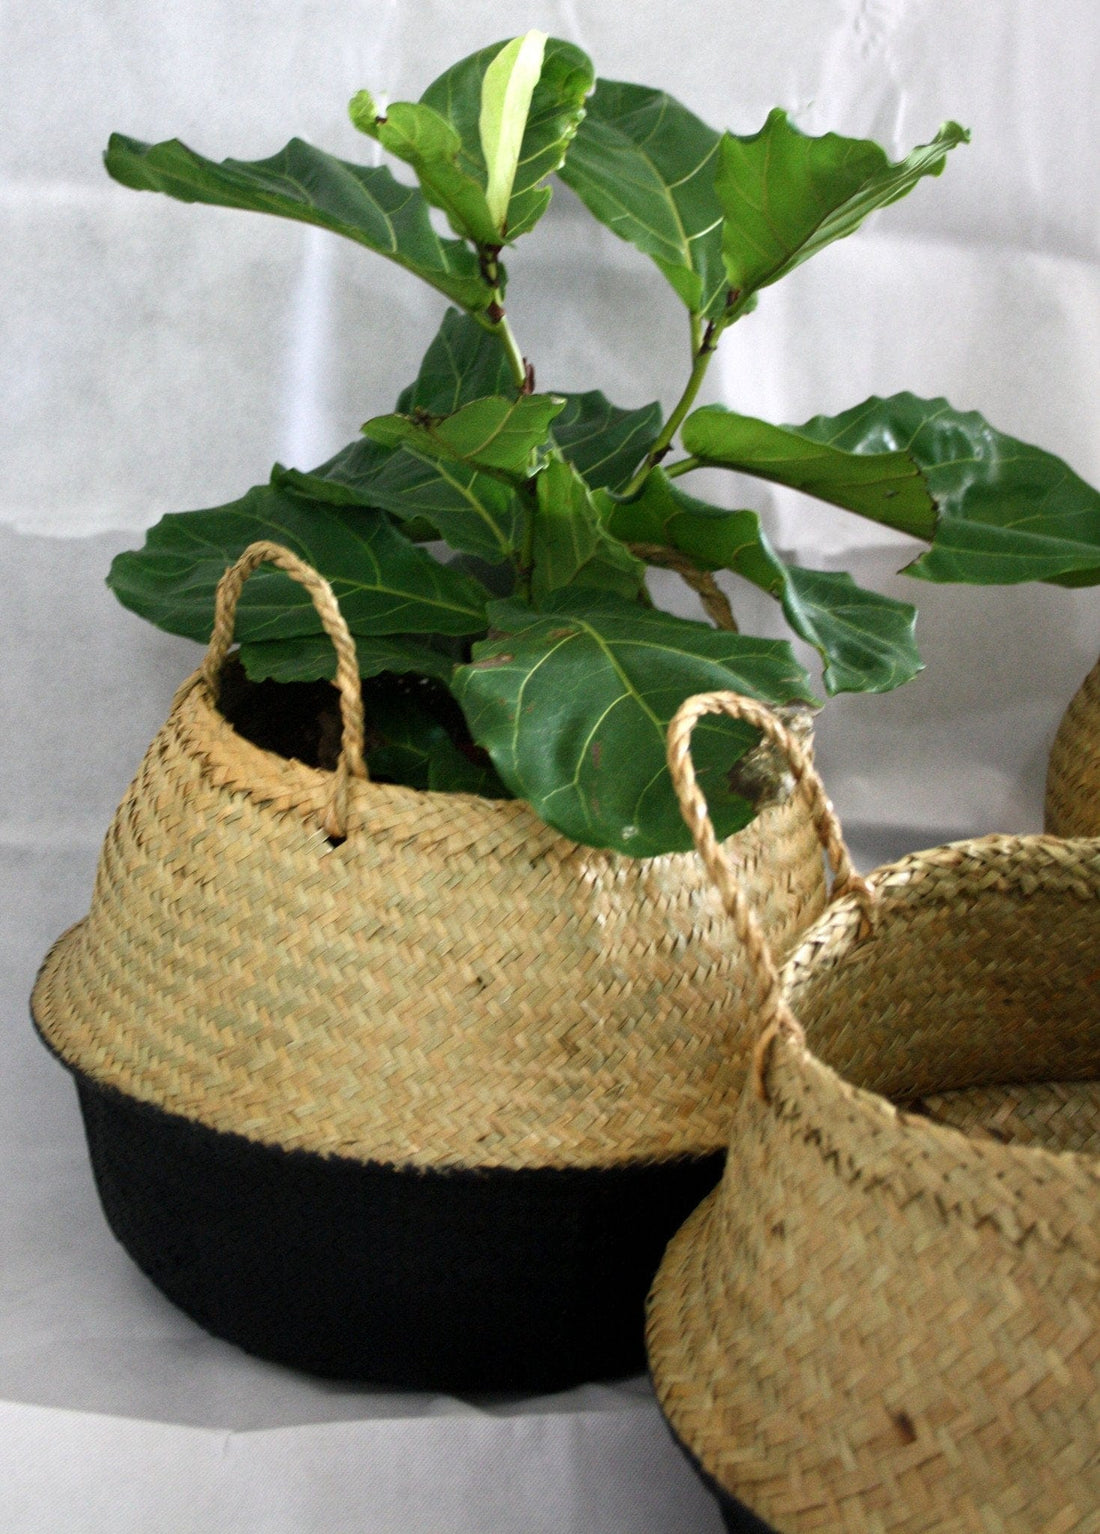 Medium Foldable Seagrass Belly Basket - Black.